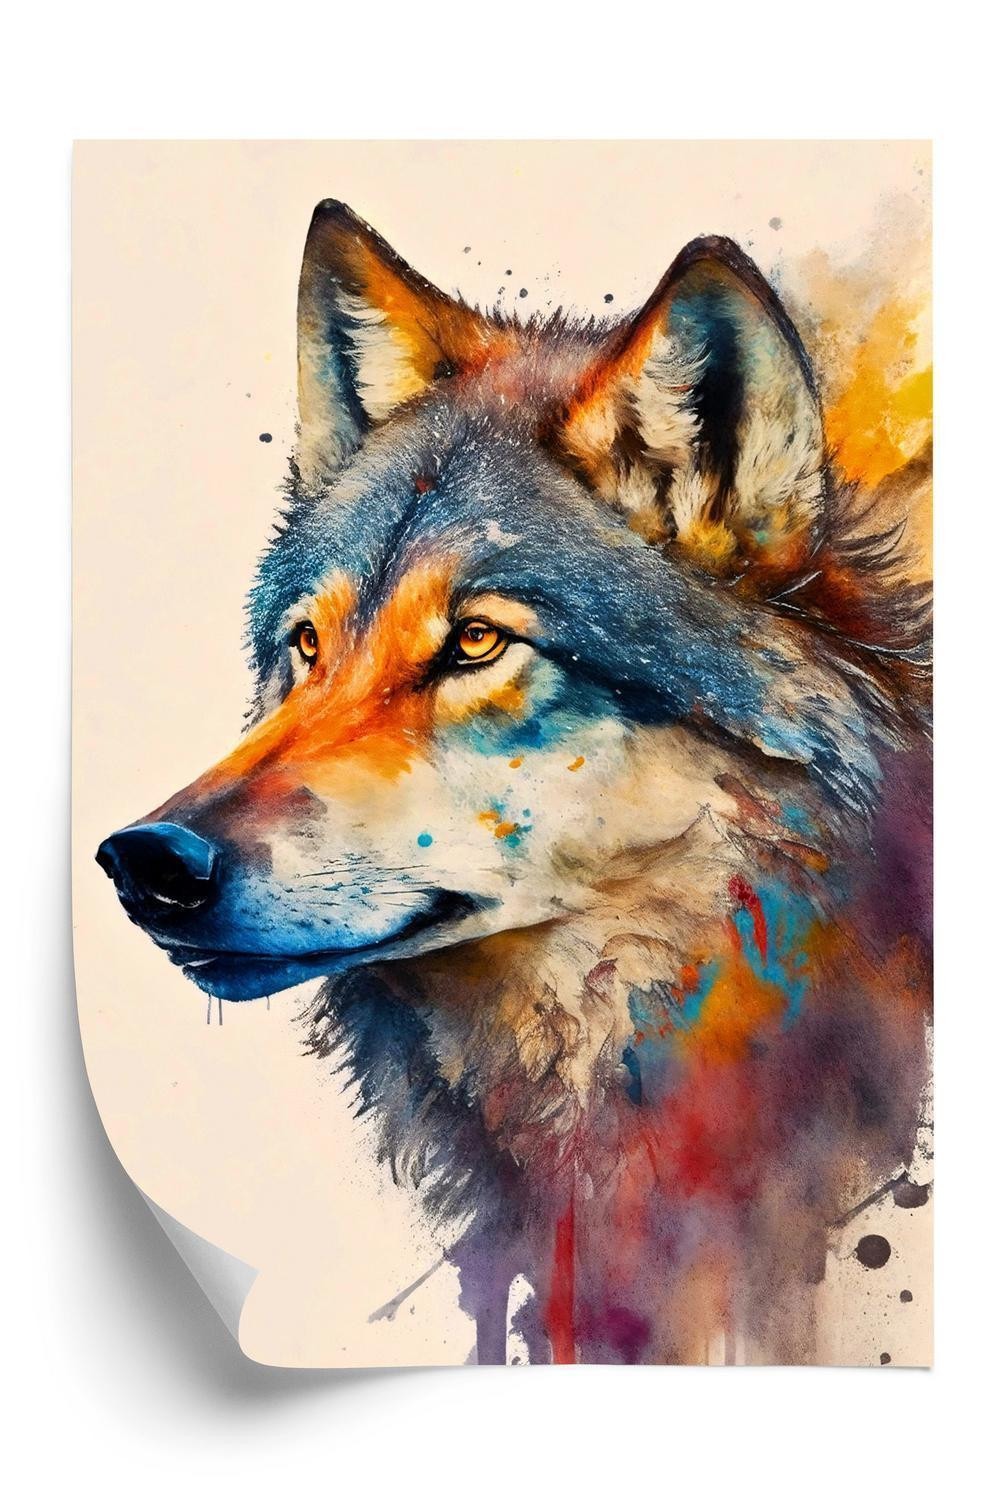 Plakat - Portræt med en farverig ulv